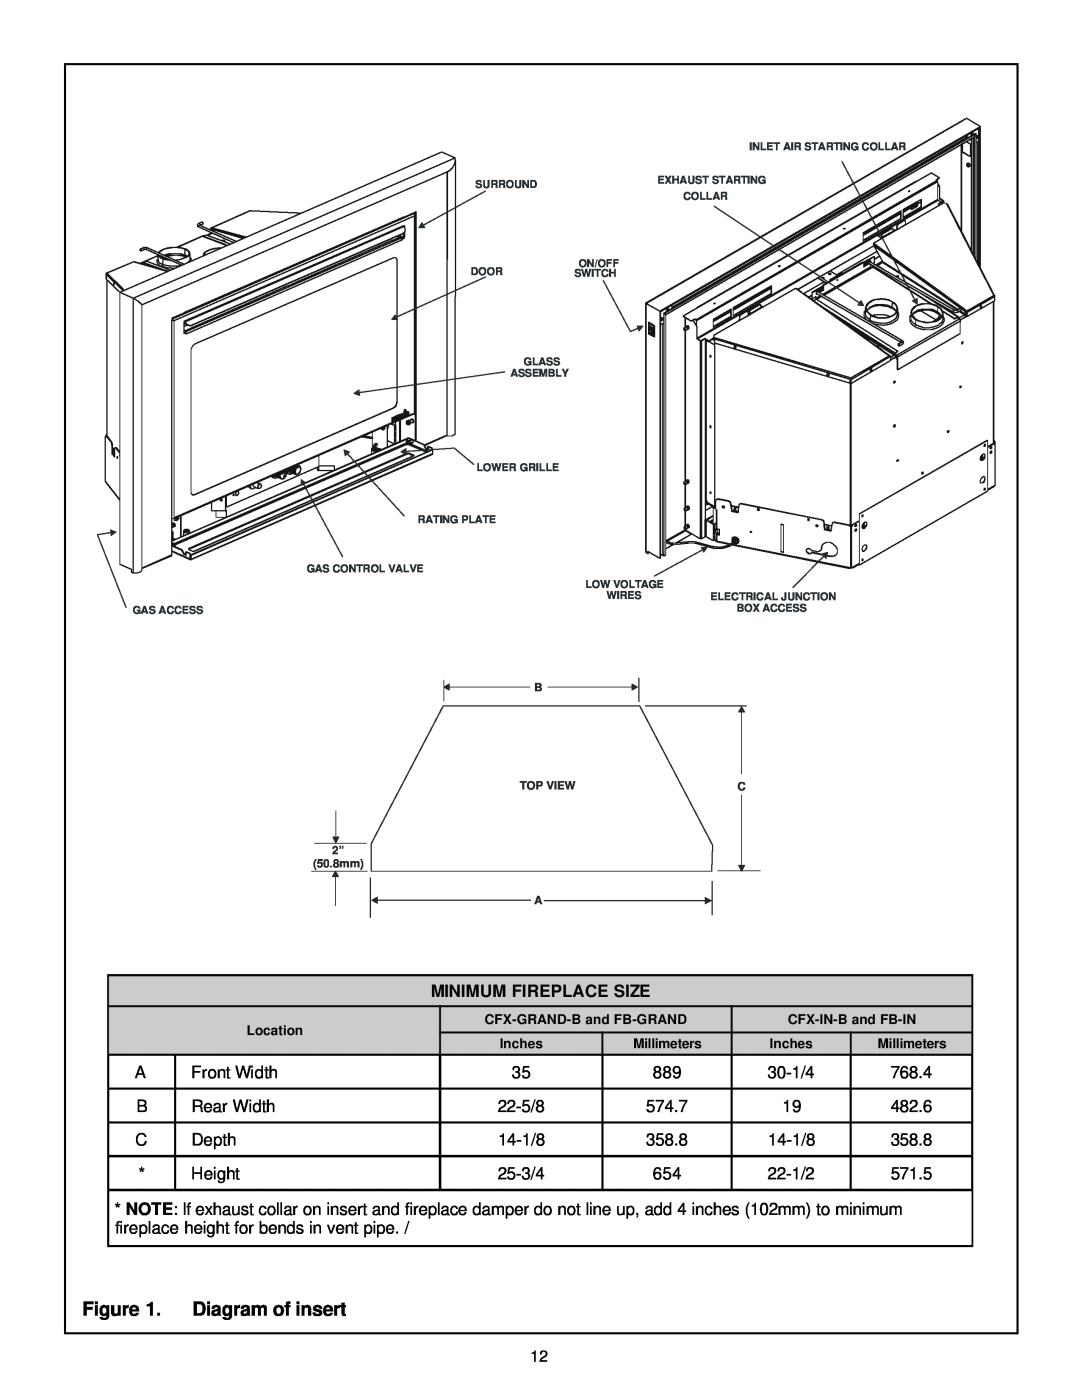 Heat & Glo LifeStyle FB-Grand, FB-IN, CFX-Grand-B, CFX-IN-B manual Diagram of insert, Minimum Fireplace Size 